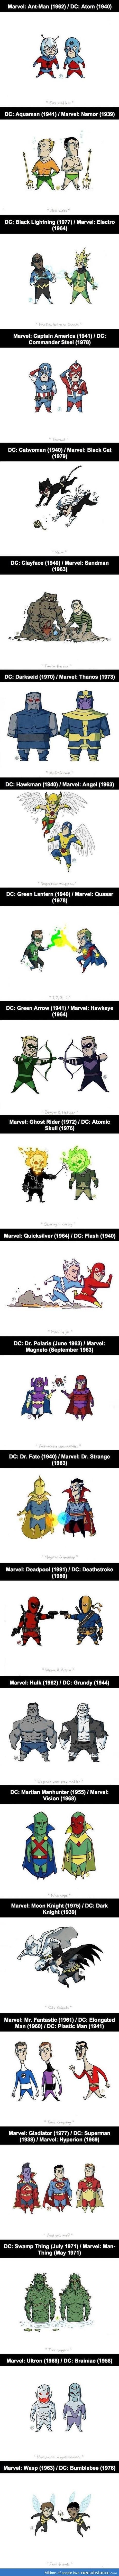 DC vs Marvel: Similar Characters